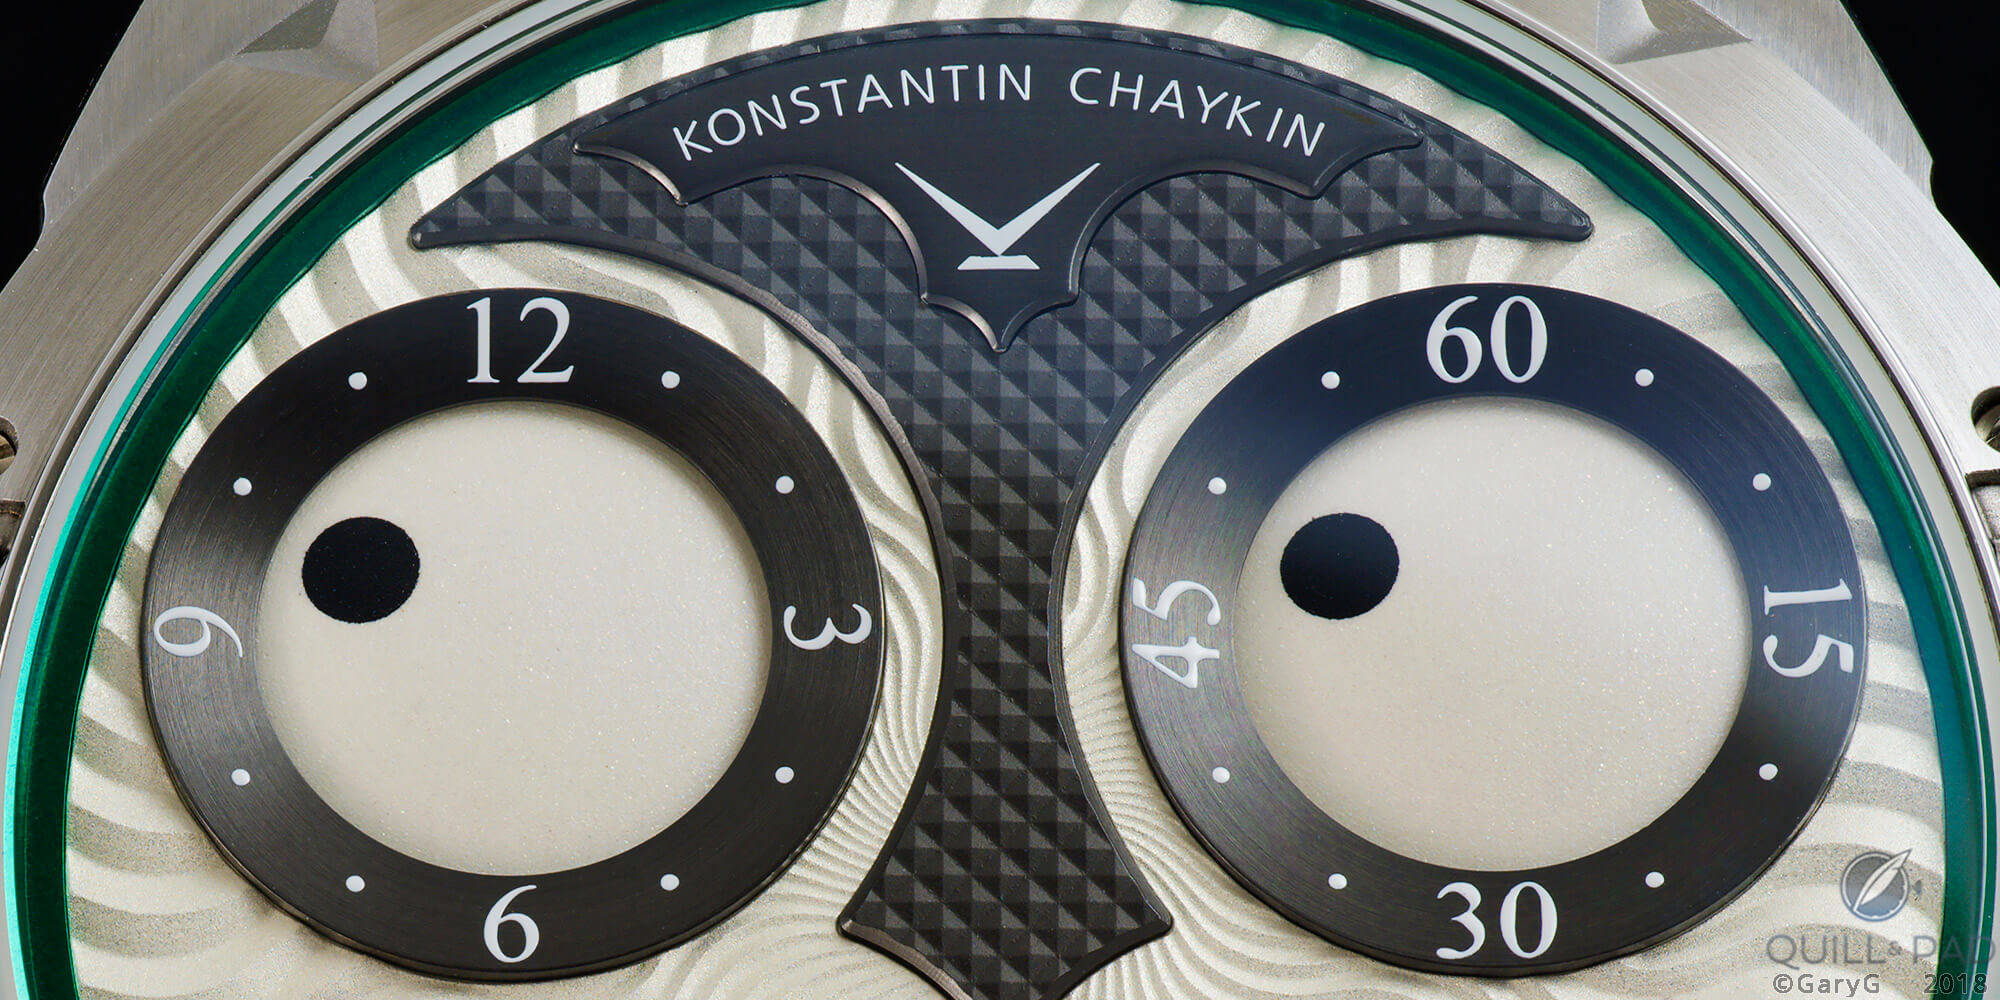 Here's looking at you: dial detail, Joker by Konstantin Chaykin